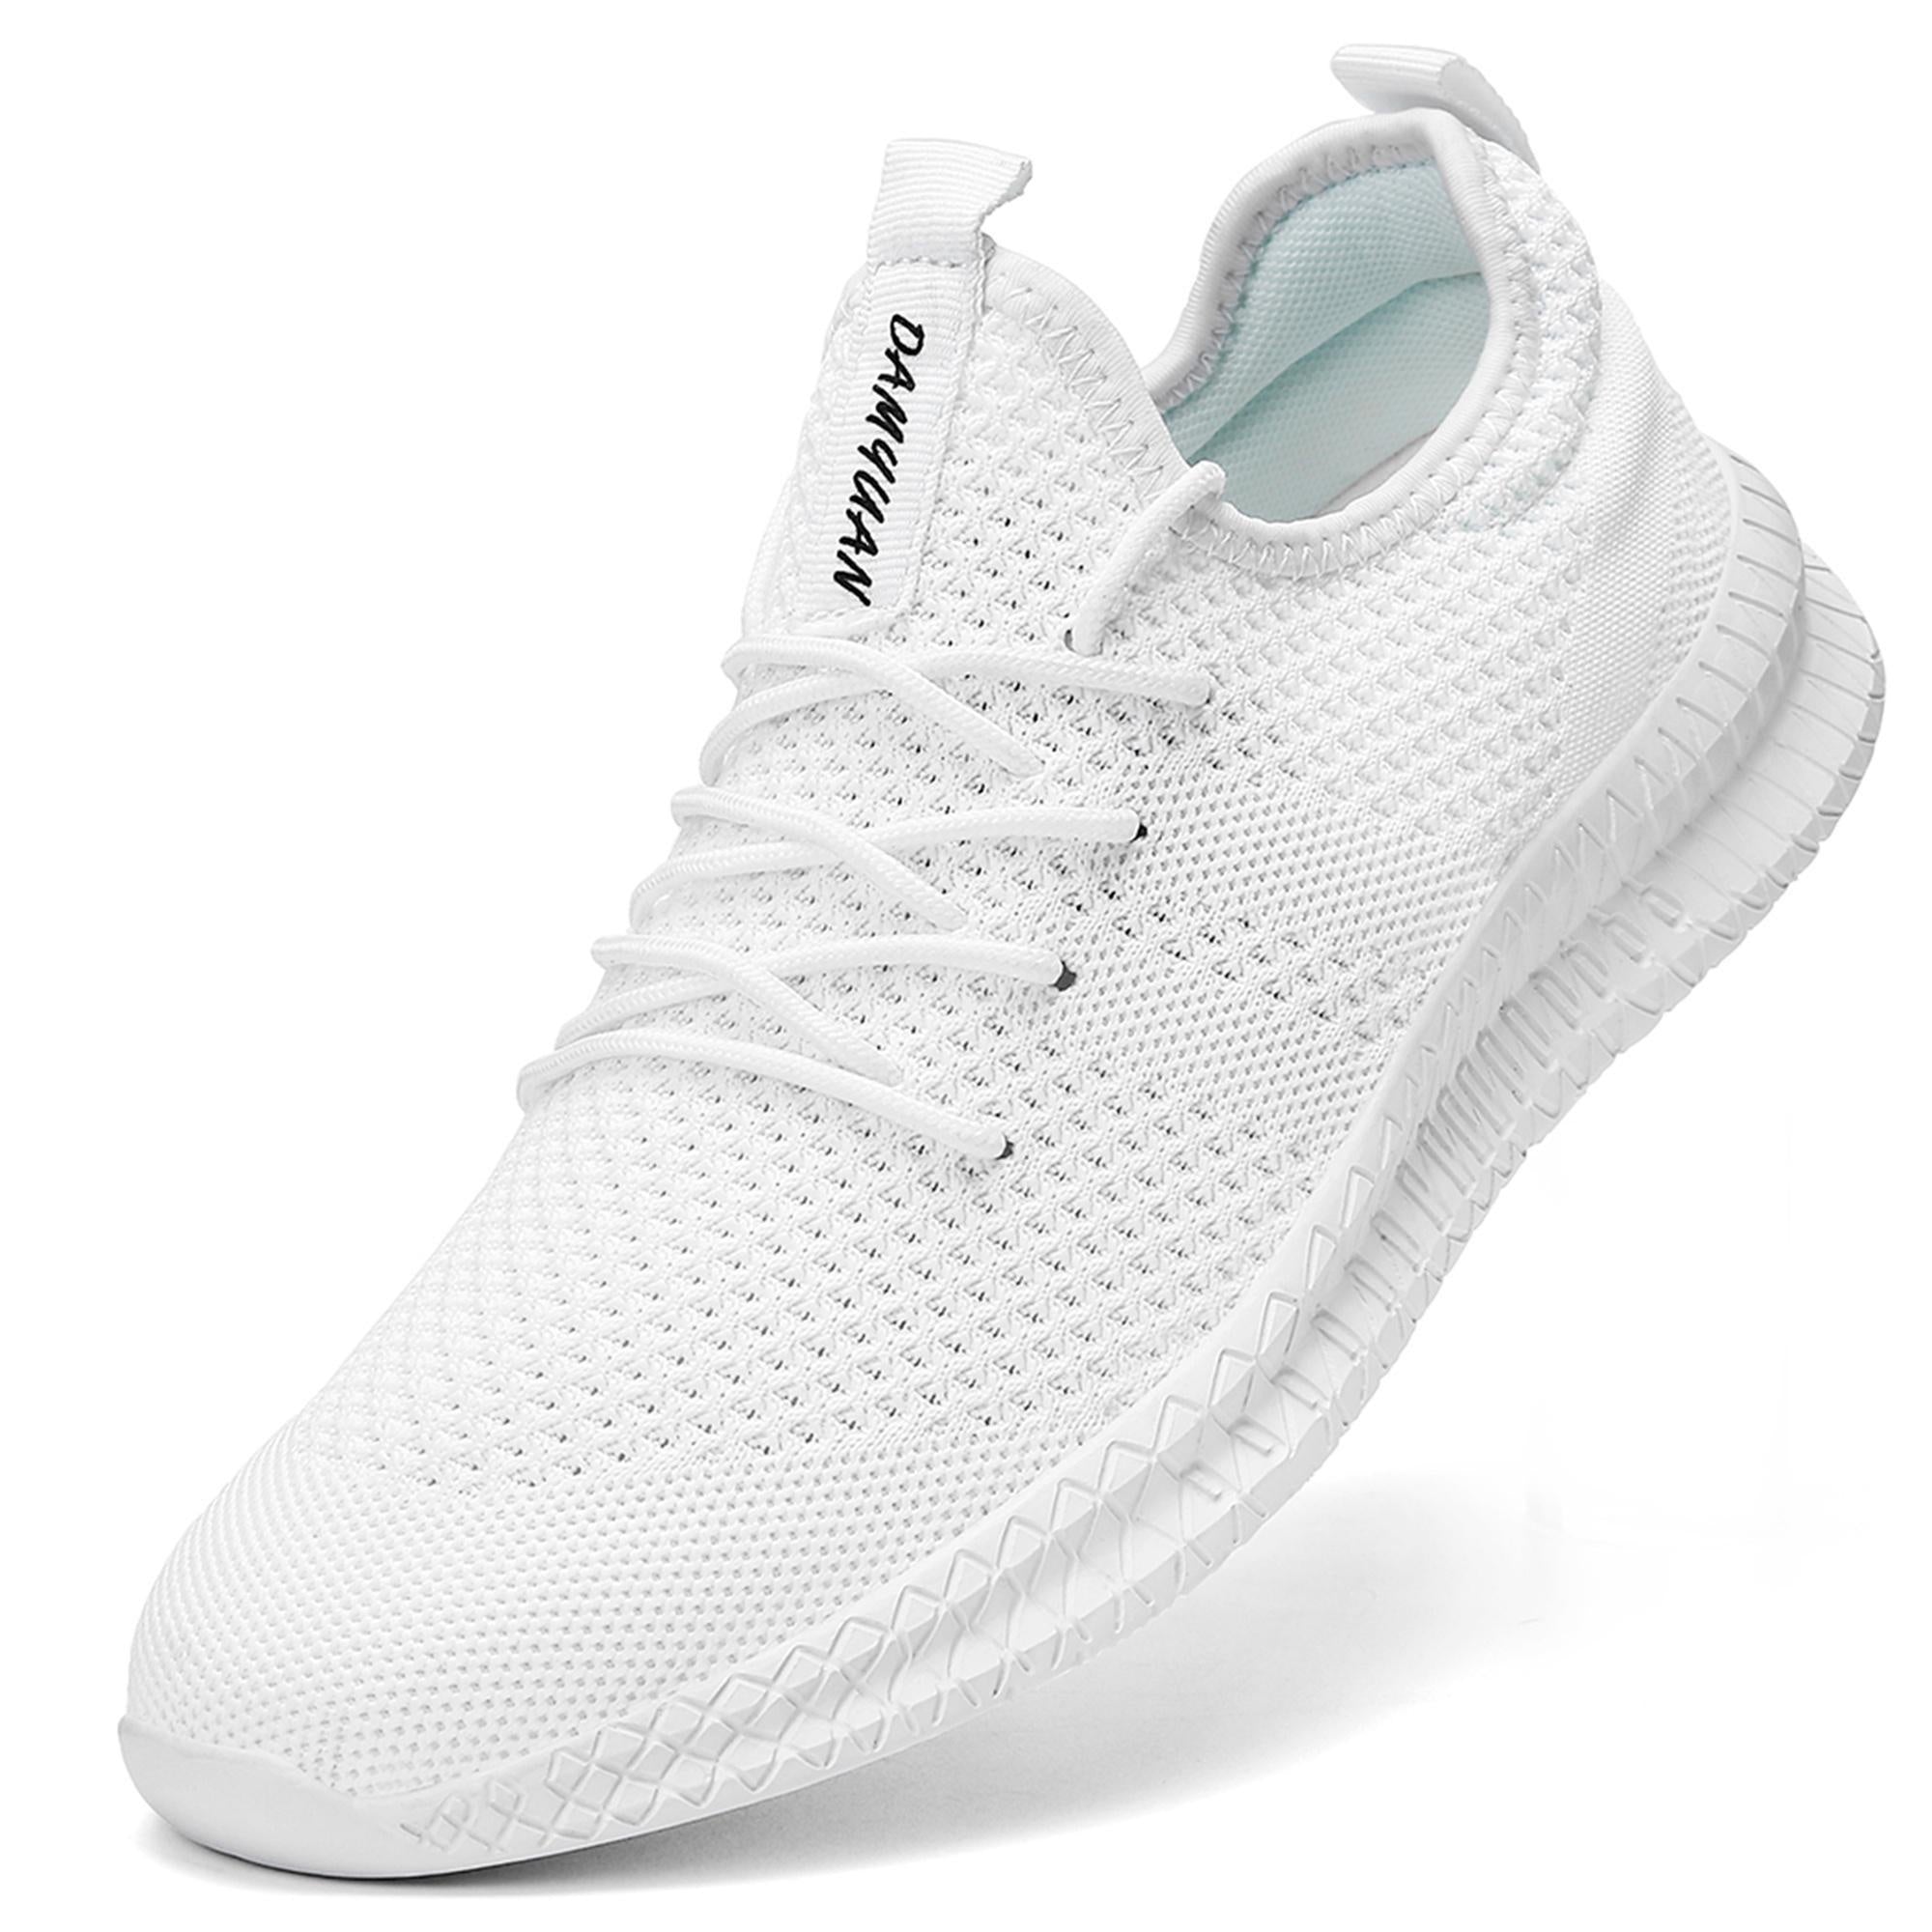 Damyuan Men Sneakers Lightweight Sport Athletic Running Shoes Comfort Casual Walking Tennis Shoes